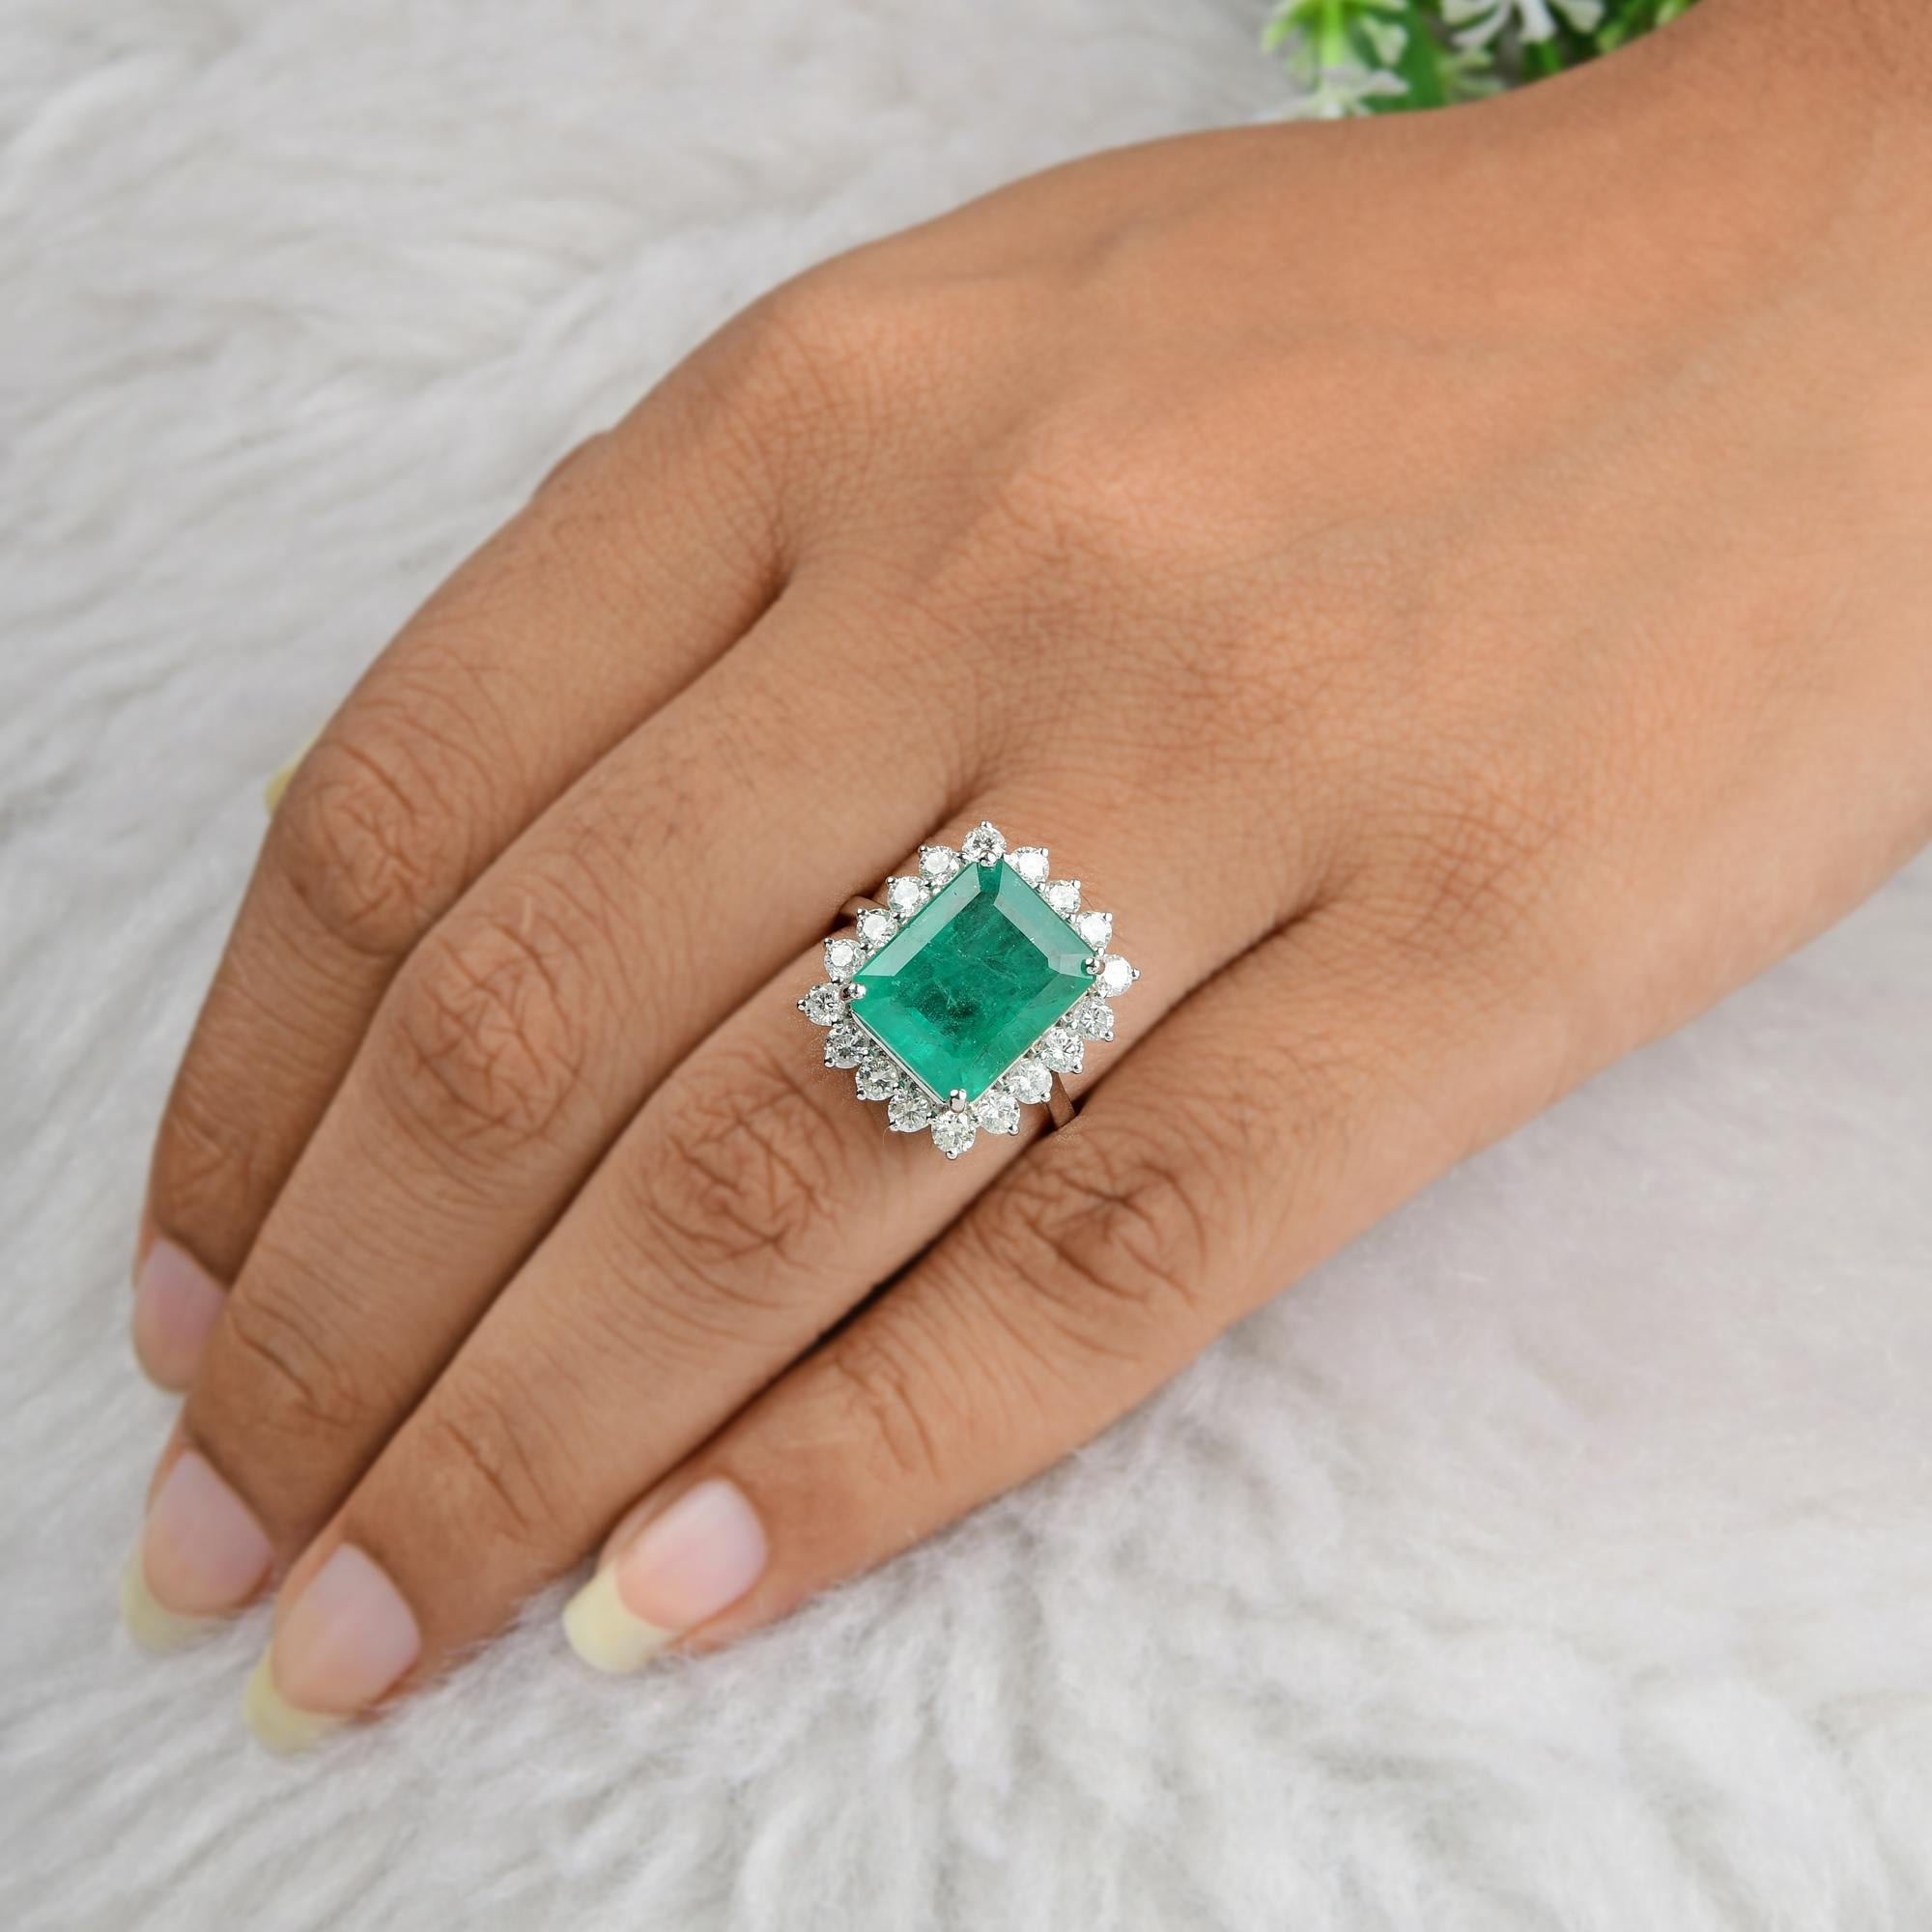 For Sale:  18 Karat White Gold Natural Emerald Gemstone Ring Diamond Handmade Fine Jewelry 4